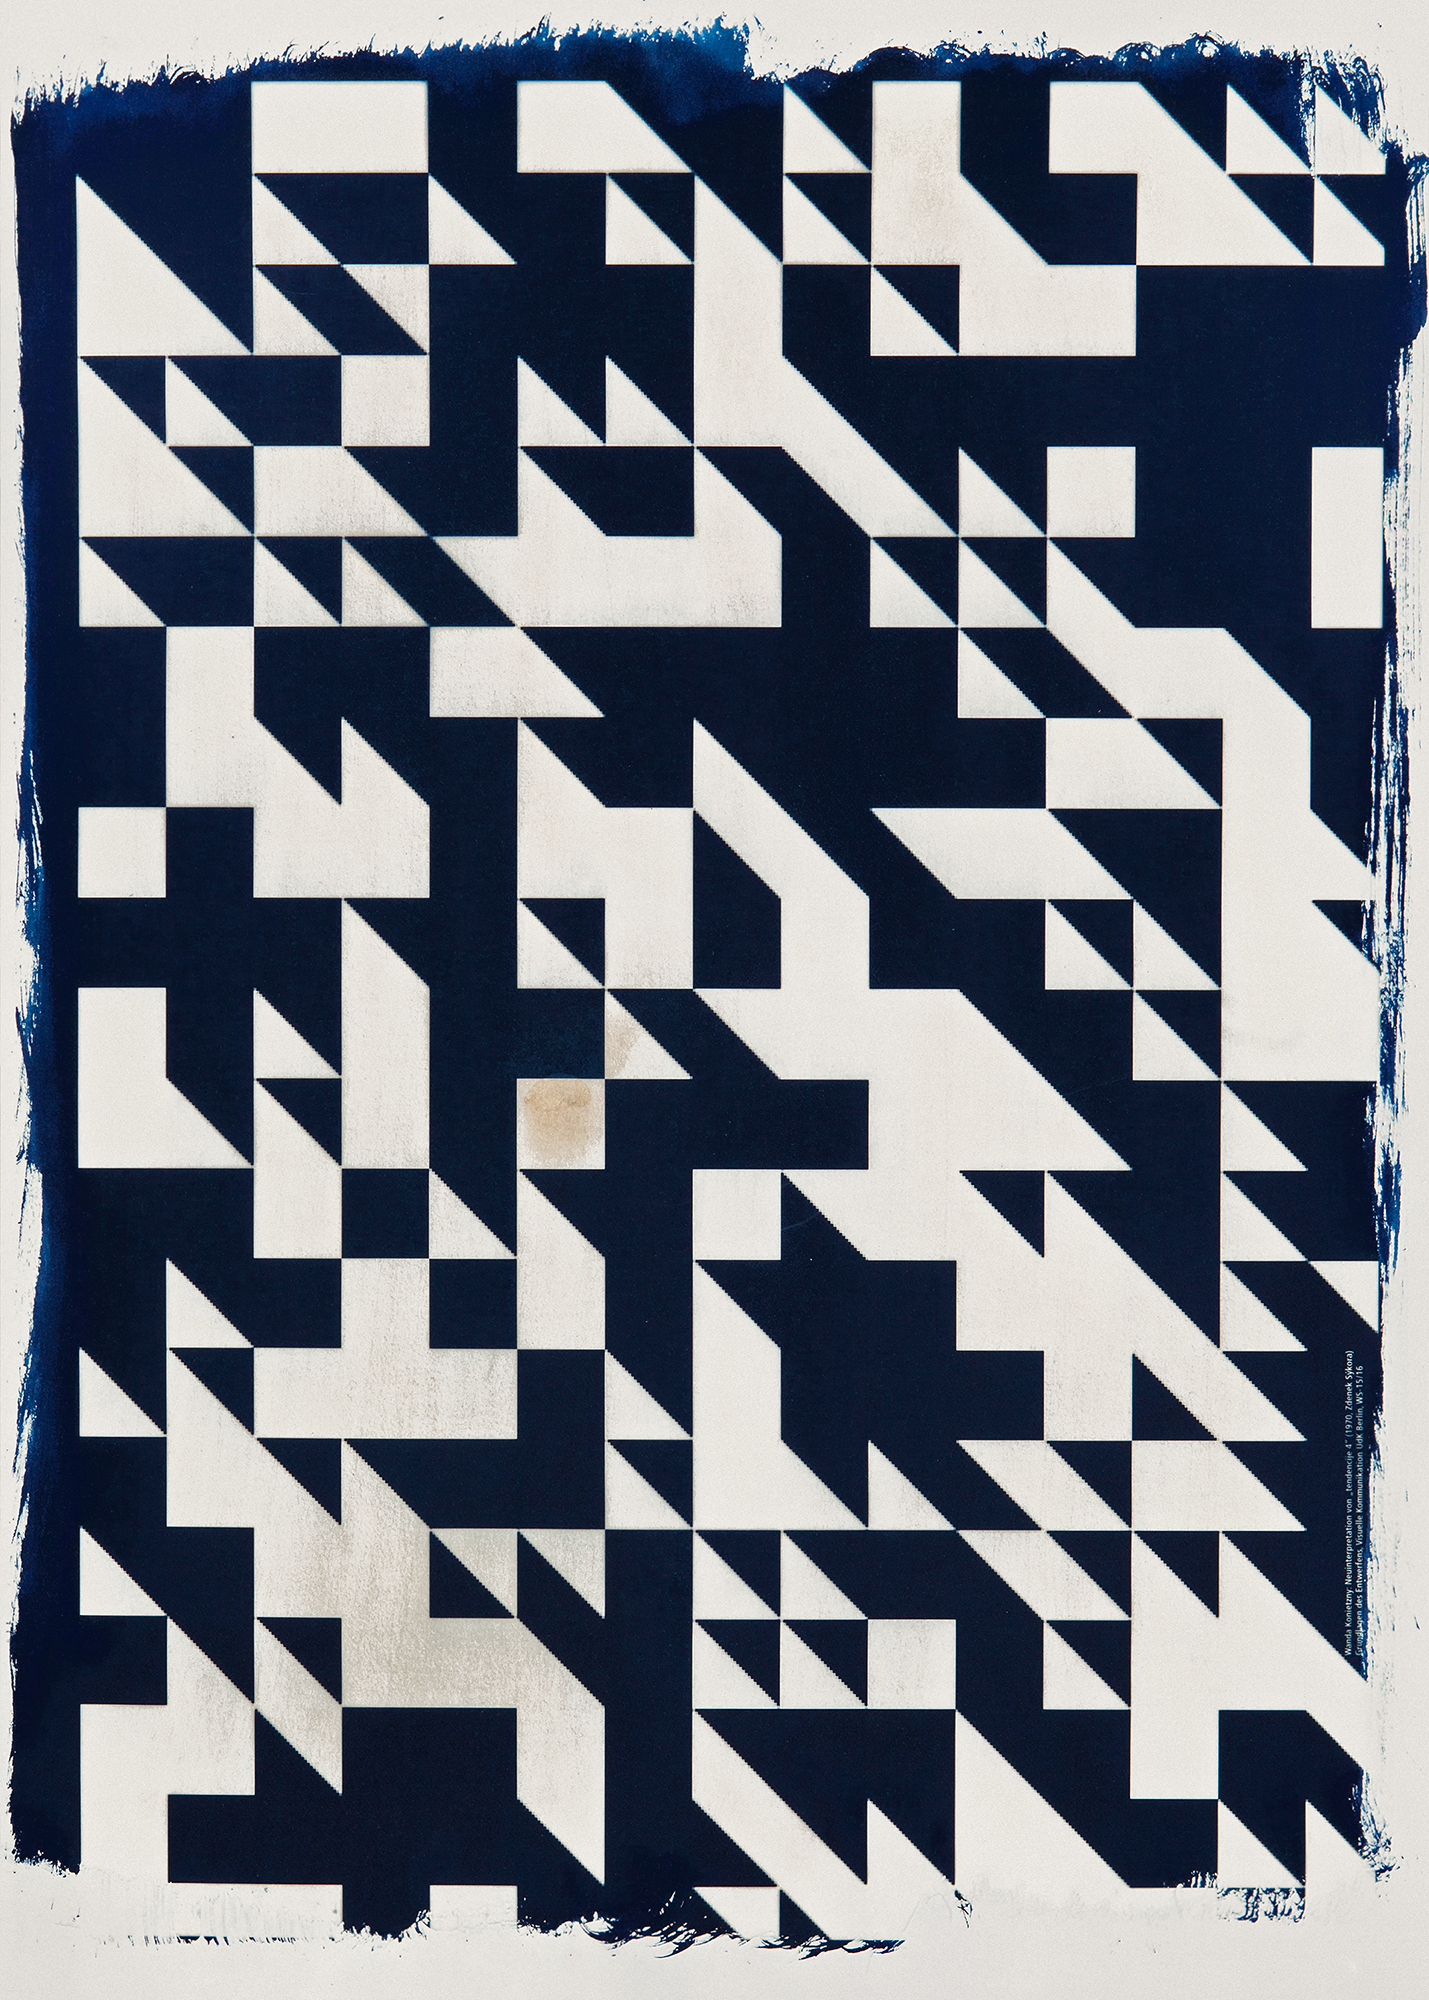 Wanda Konietzny, 42×59,4 cm, Inspiriation: Zdenek Sykora, Black-White-Structure, 1965